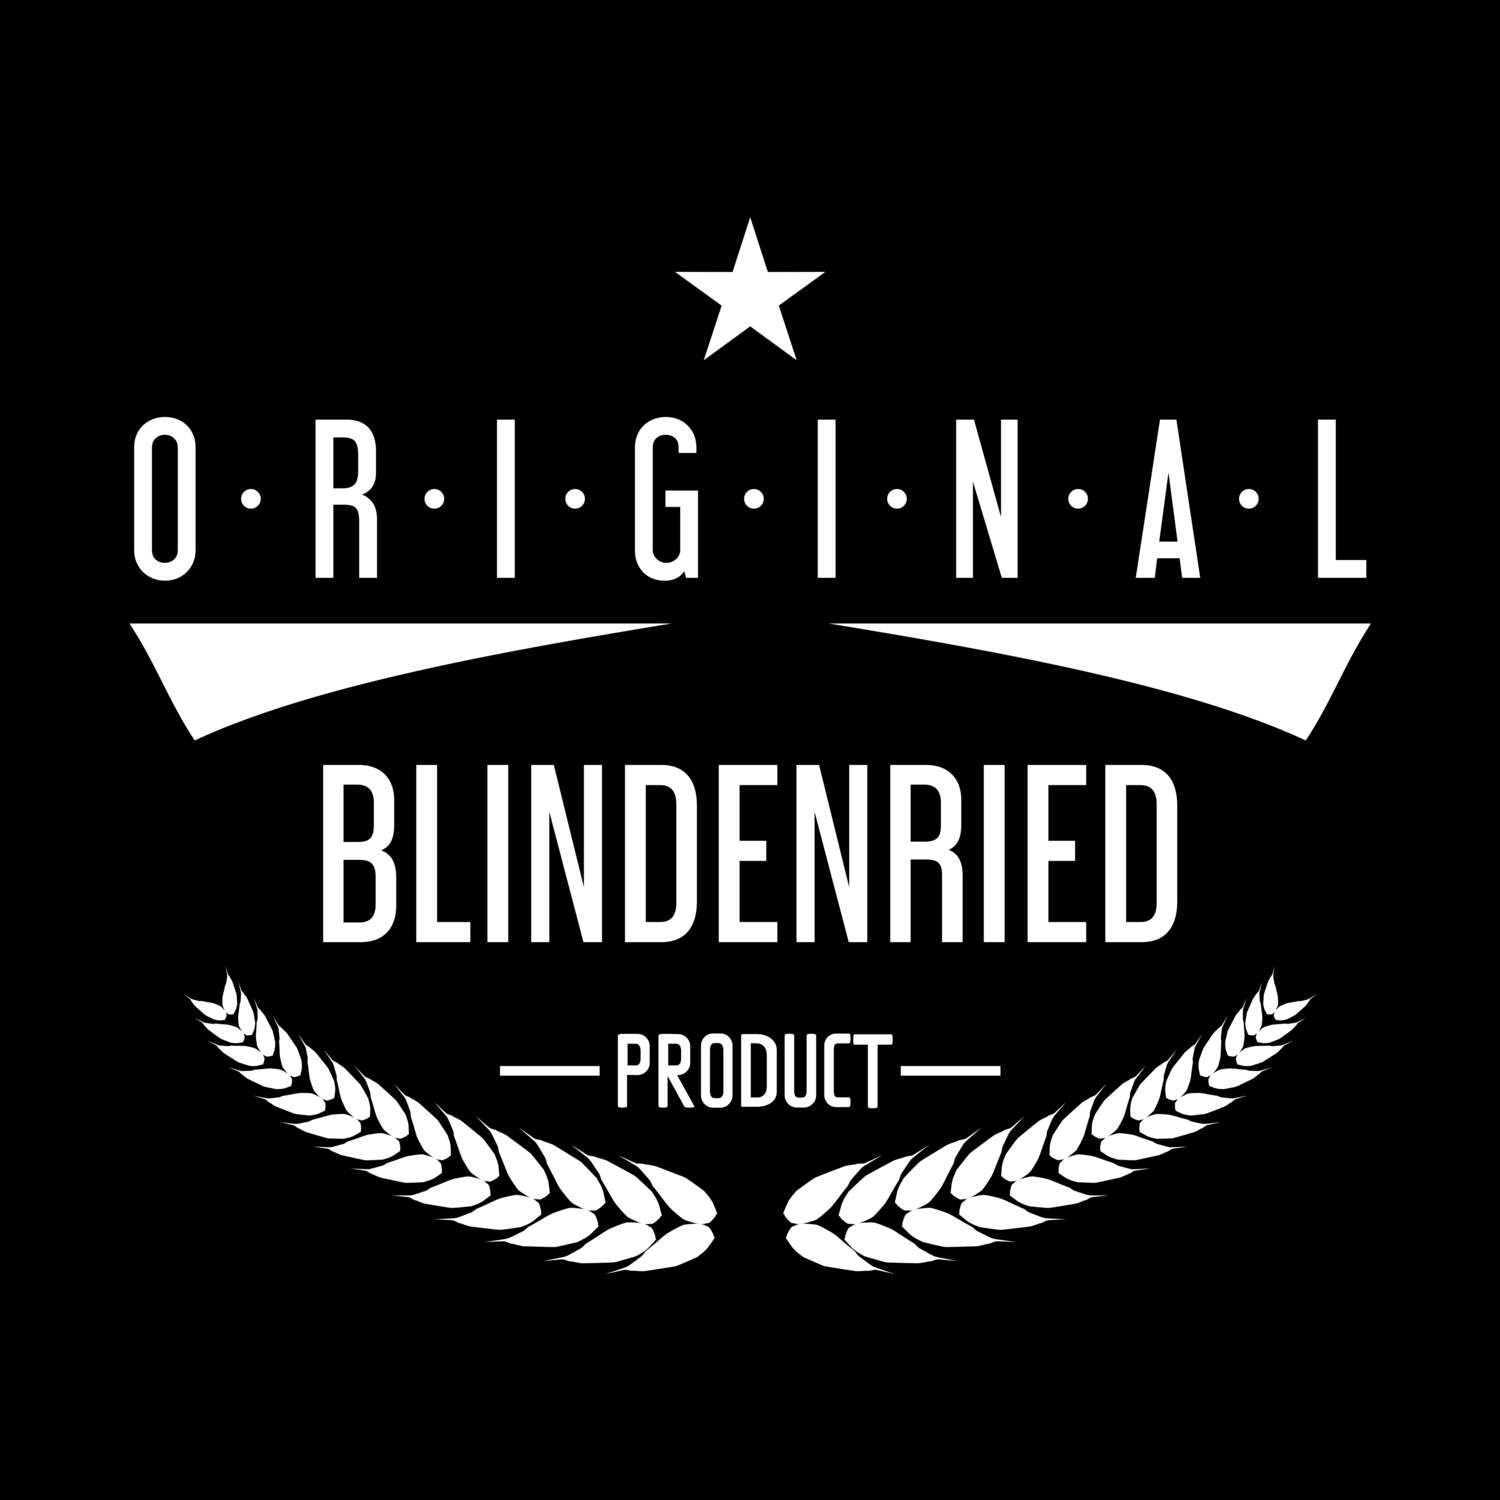 Blindenried T-Shirt »Original Product«